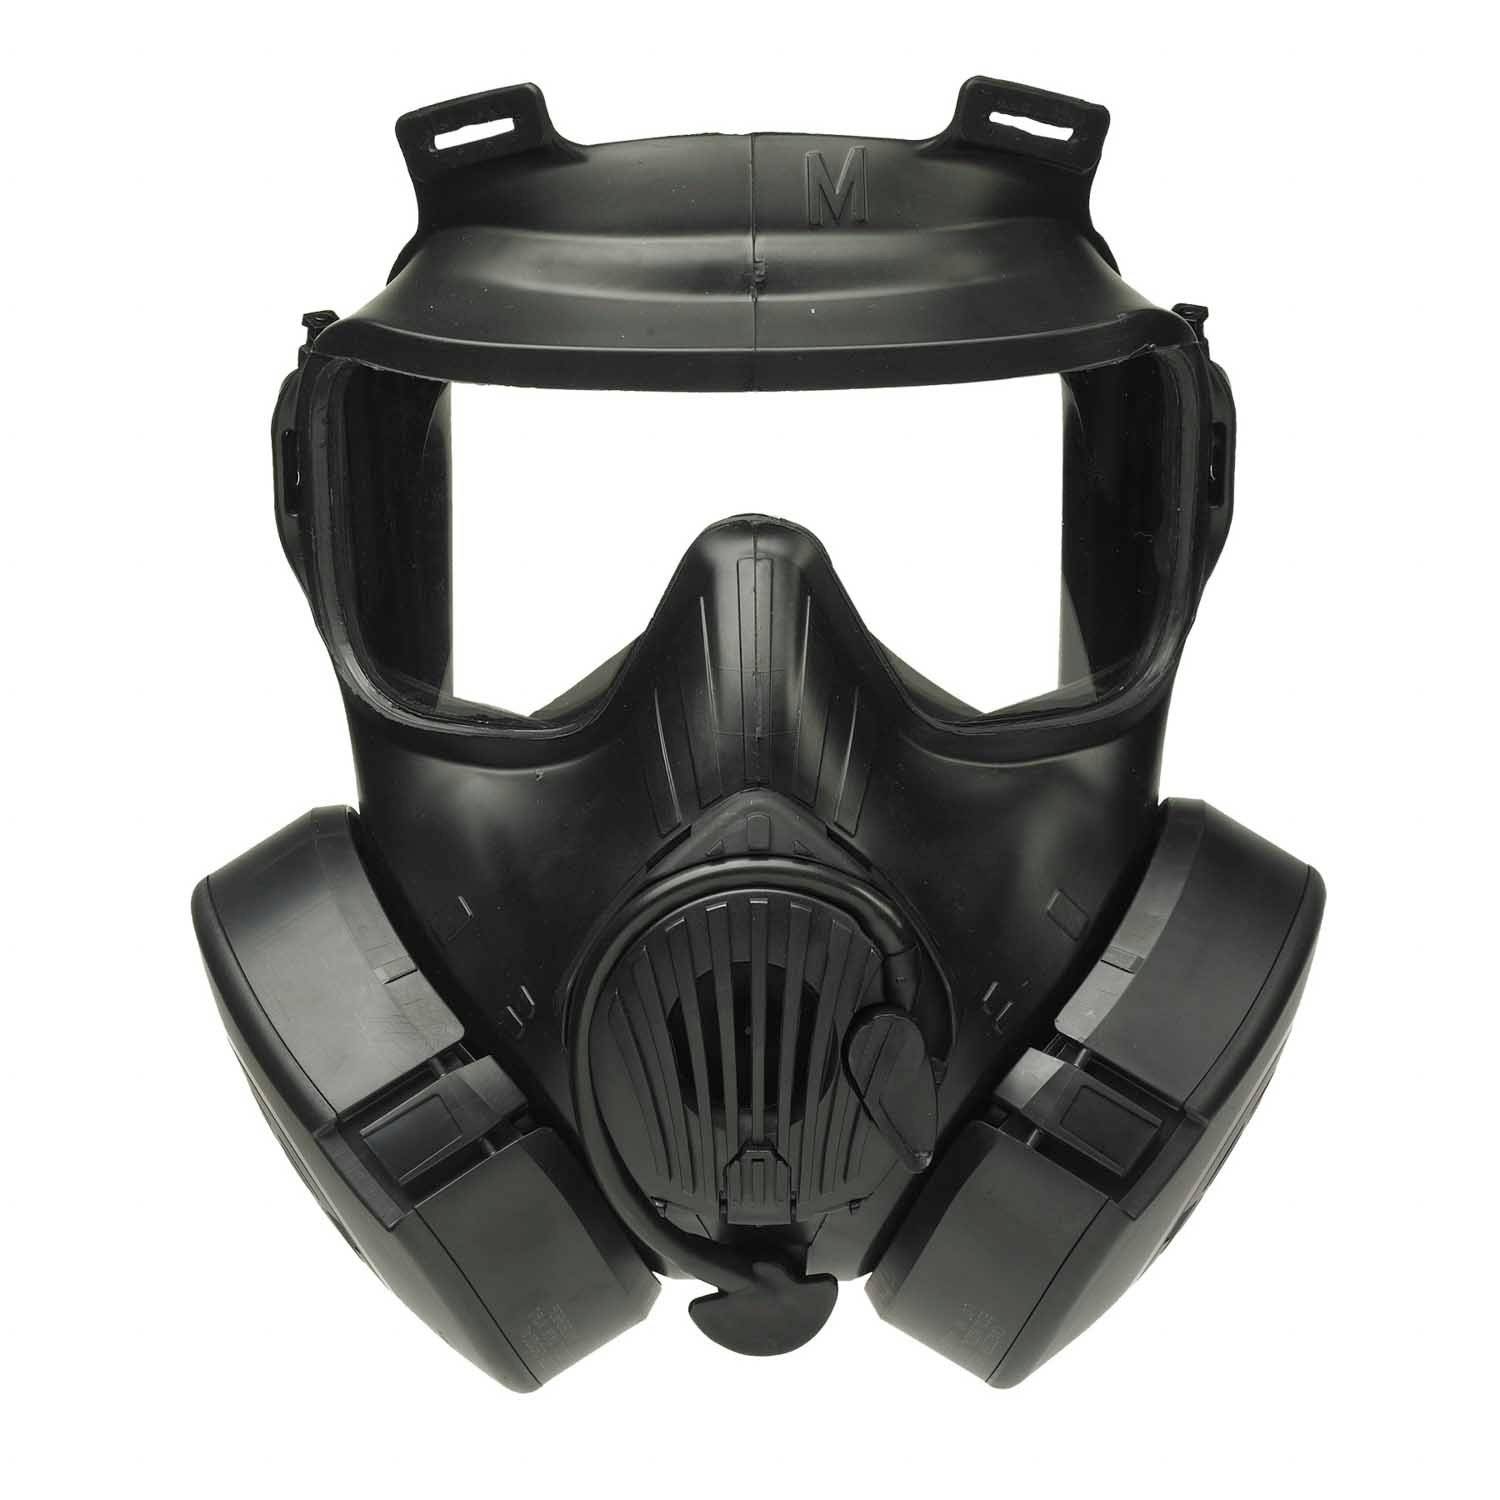 EMS AVON FM12 Tactical Respirator Gas Mask